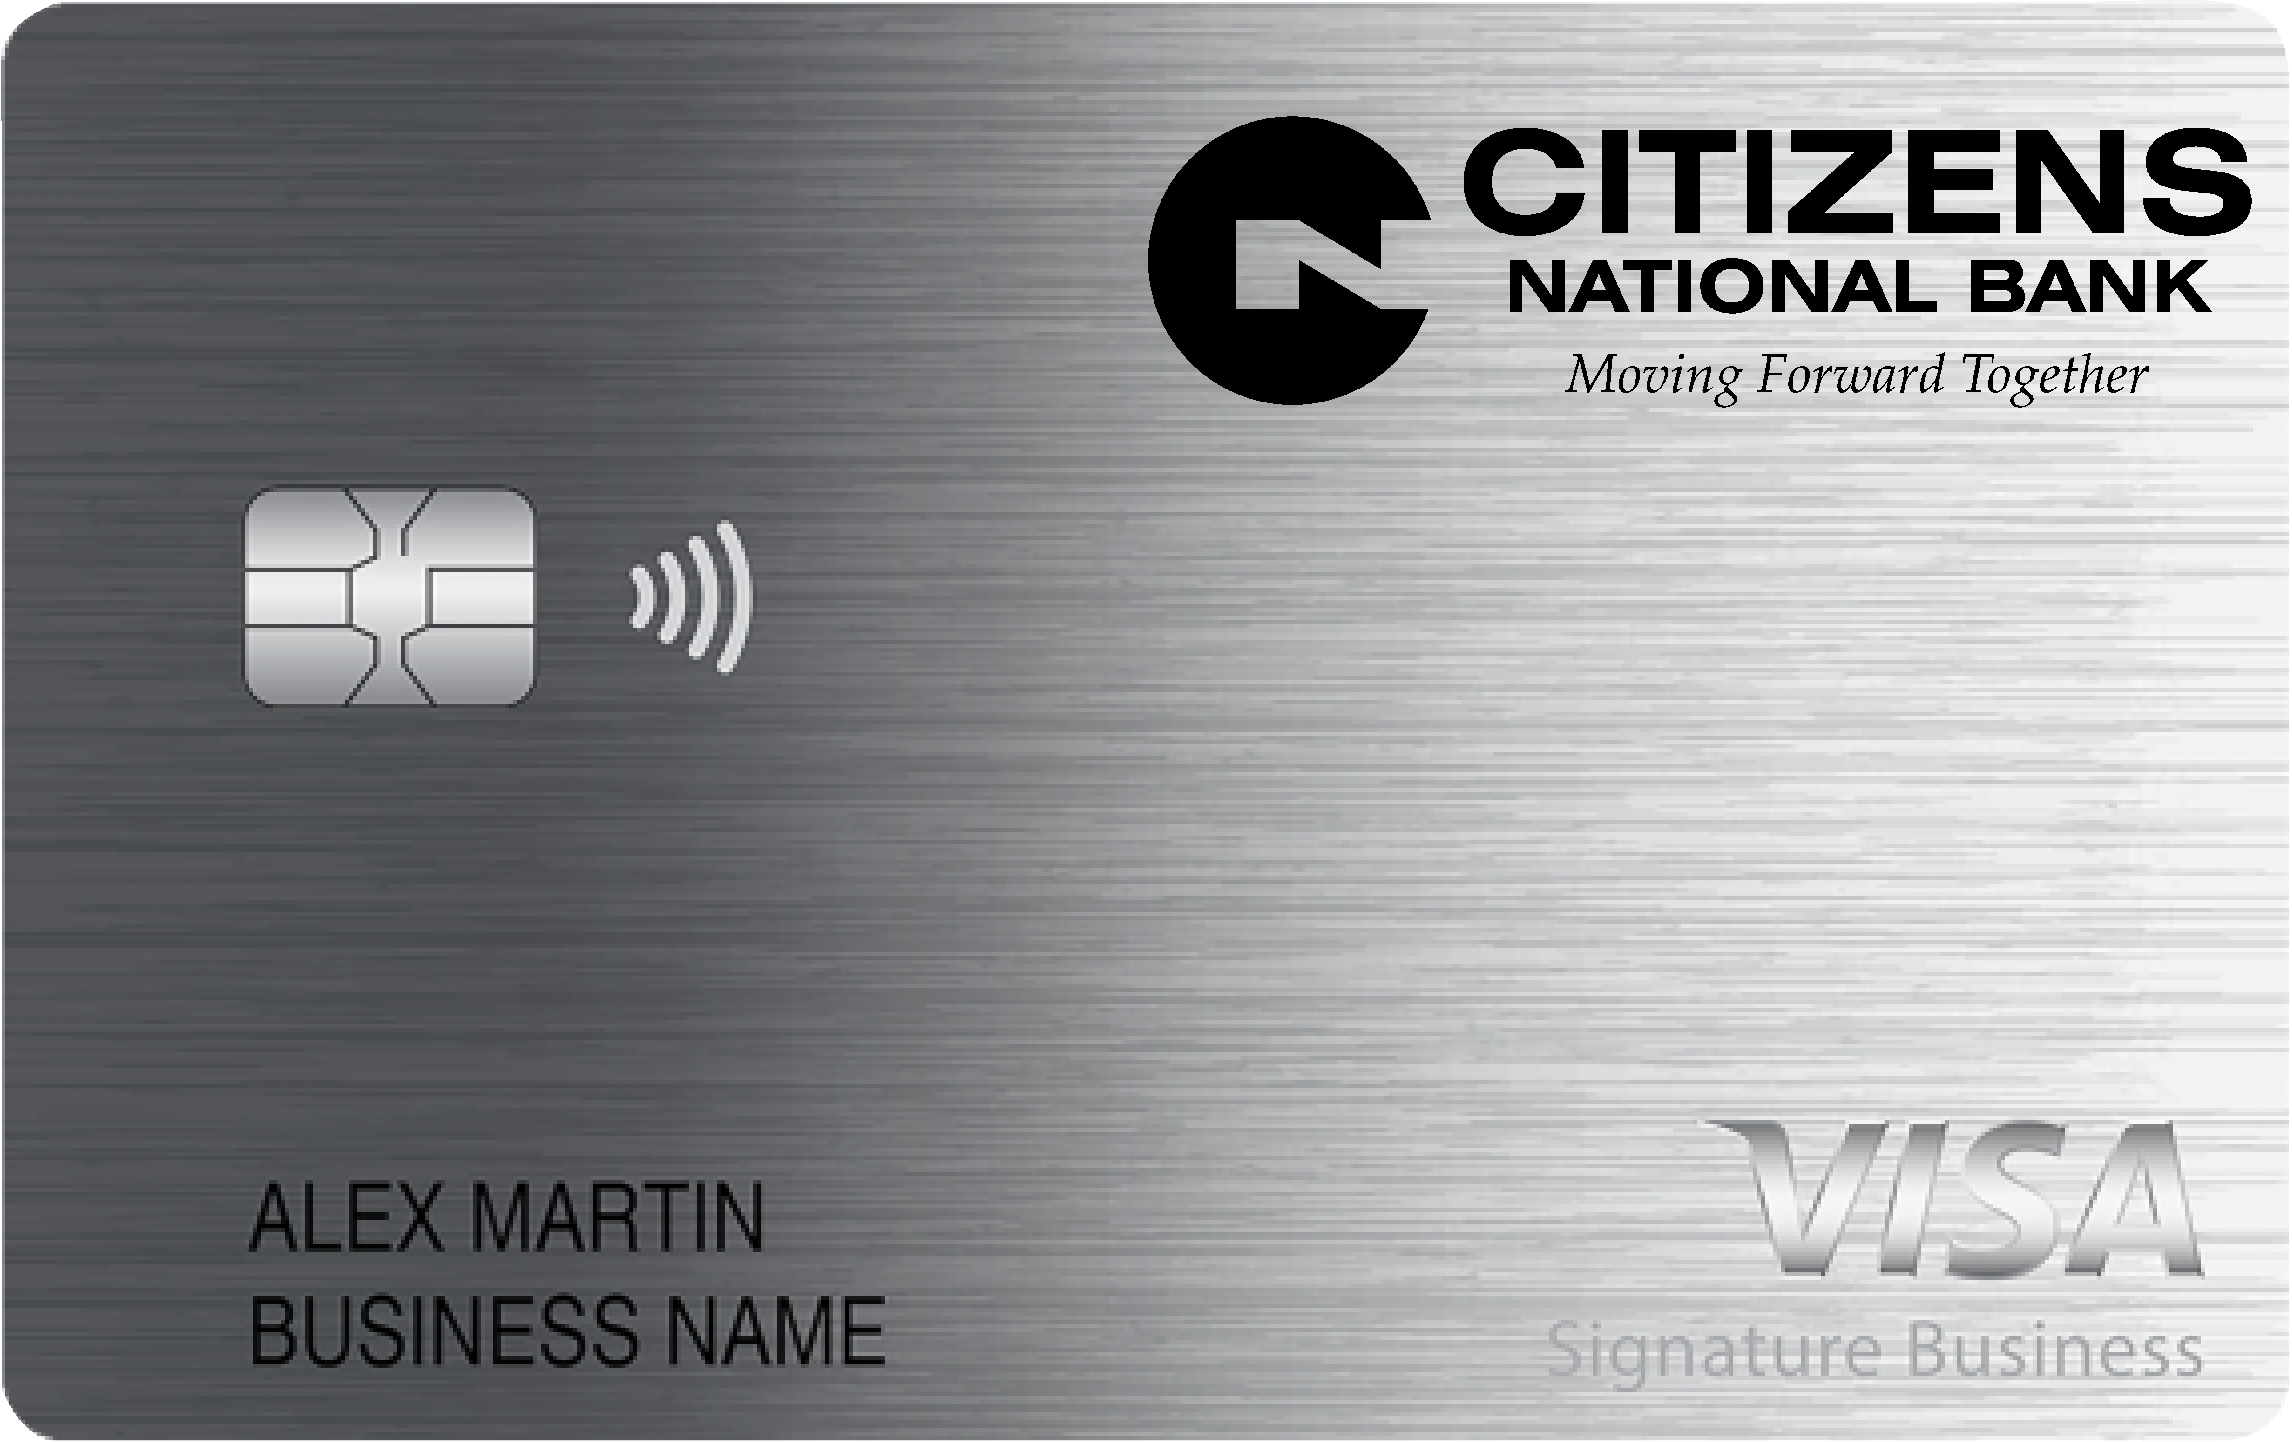 Citizens National Bank Smart Business Rewards Card